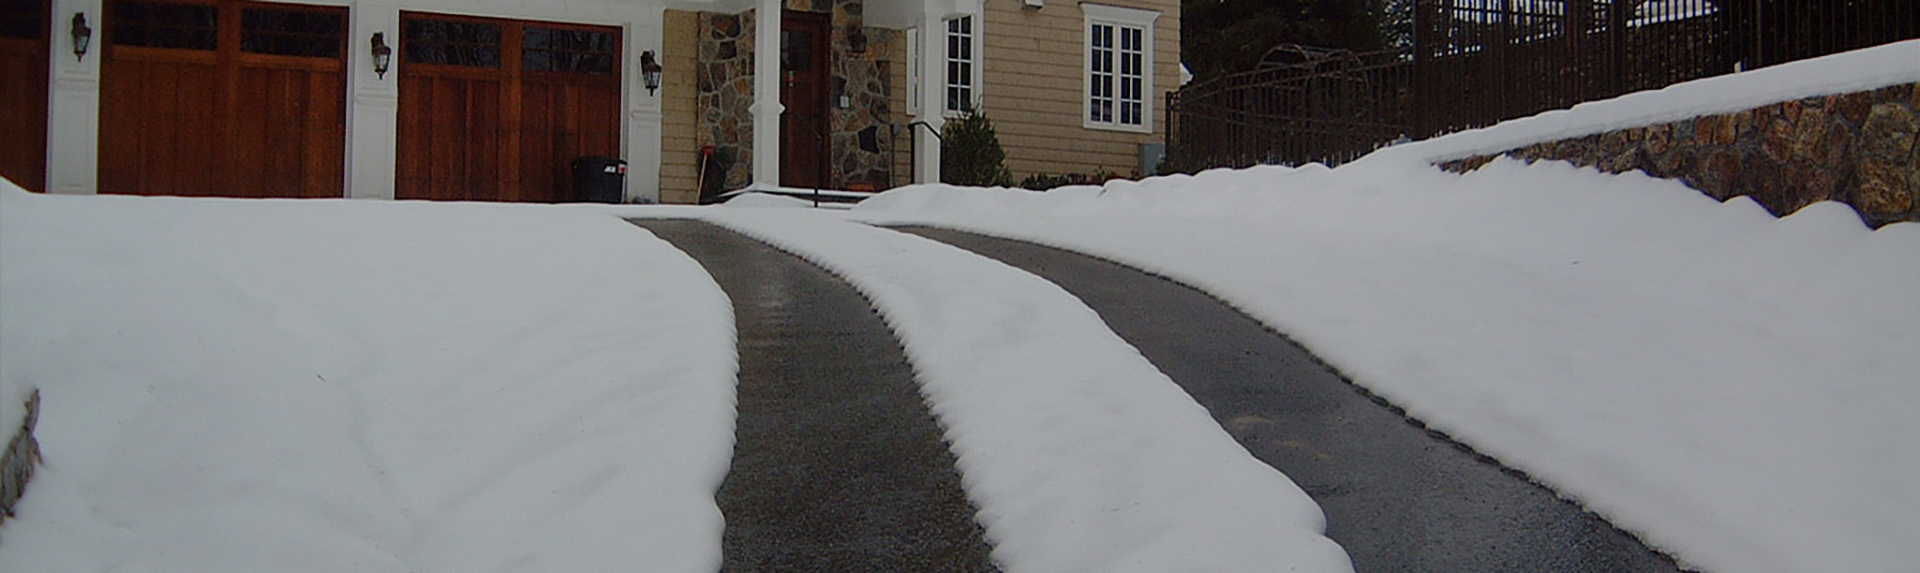 https://www.warmzone.com/snow-melting/about-heated-driveways/media/image/heated-driveway-tire-tracks-2drk.jpg